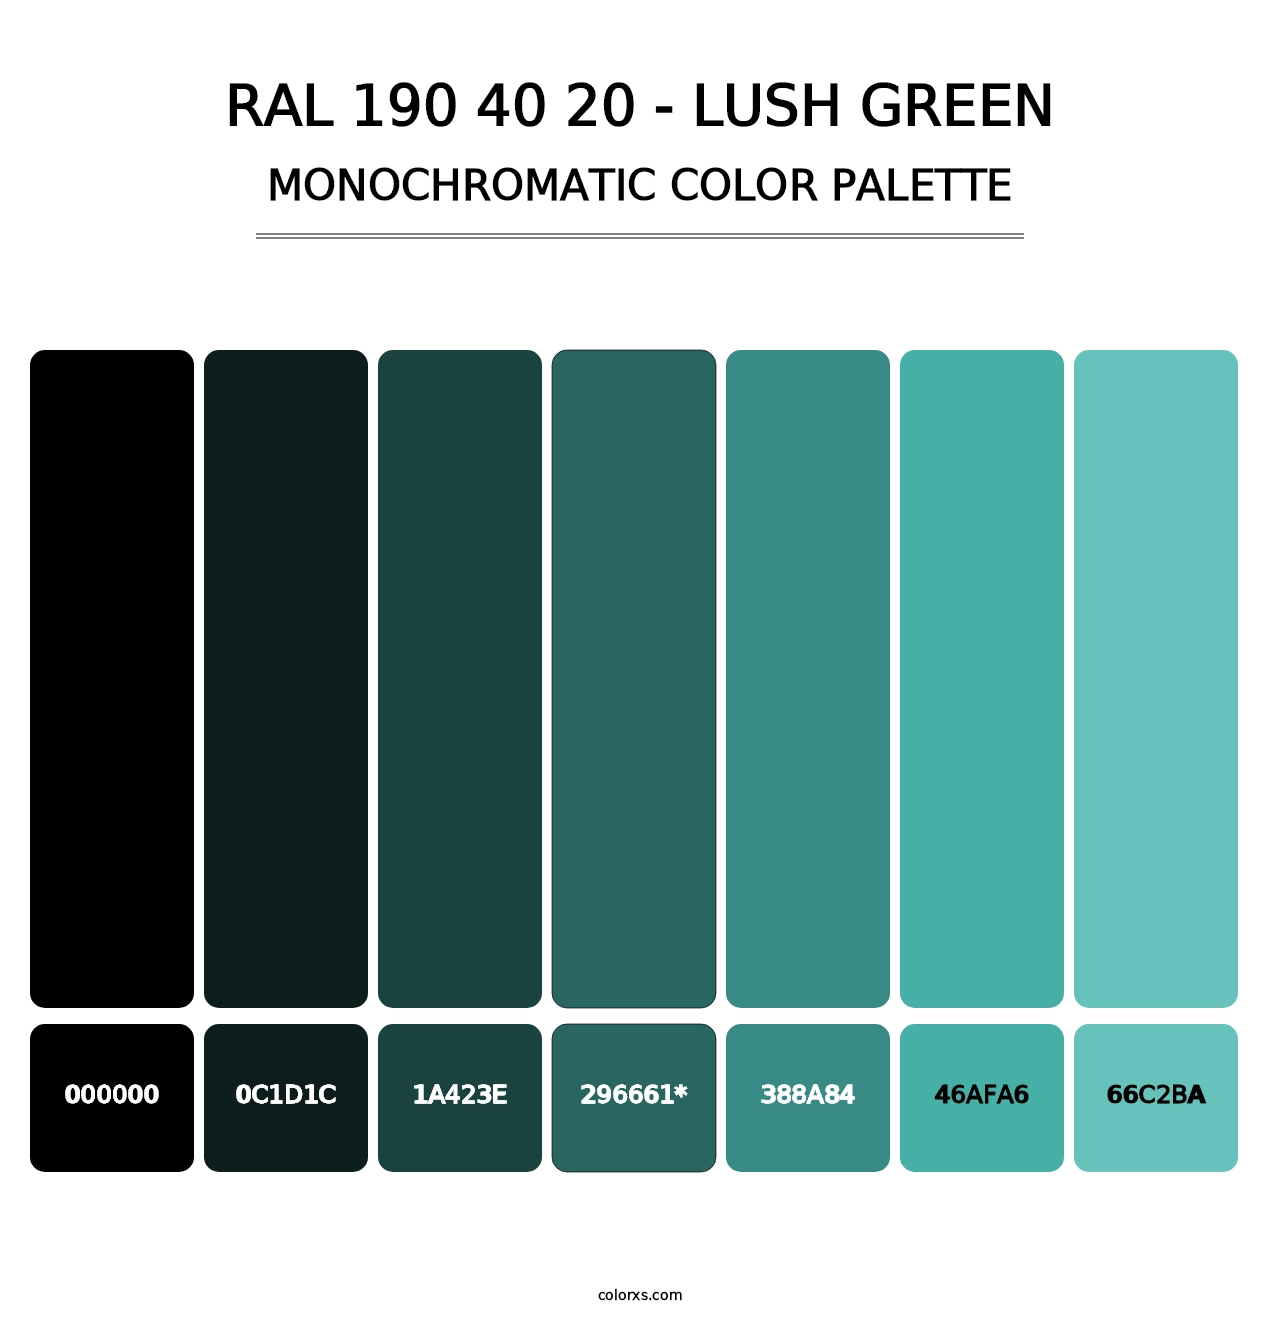 RAL 190 40 20 - Lush Green - Monochromatic Color Palette